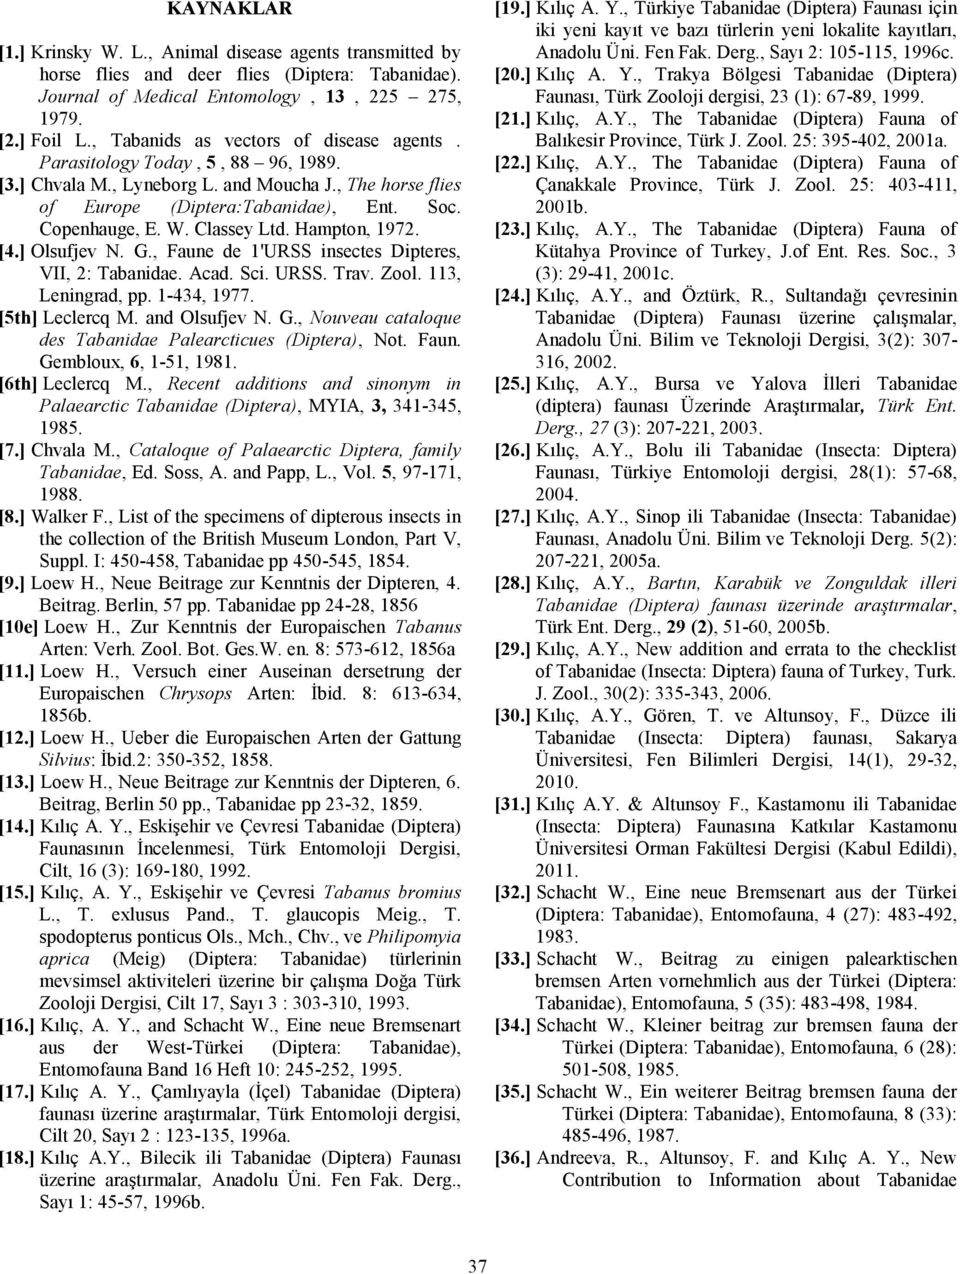 Classey Ltd. Hampton, 1972. [4.] Olsufjev N. G., Faune de 1'URSS insectes Dipteres, VII, 2: Tabanidae. Acad. Sci. URSS. Trav. Zool. 113, Leningrad, pp. 1-434, 1977. [5th] Leclercq M. and Olsufjev N.